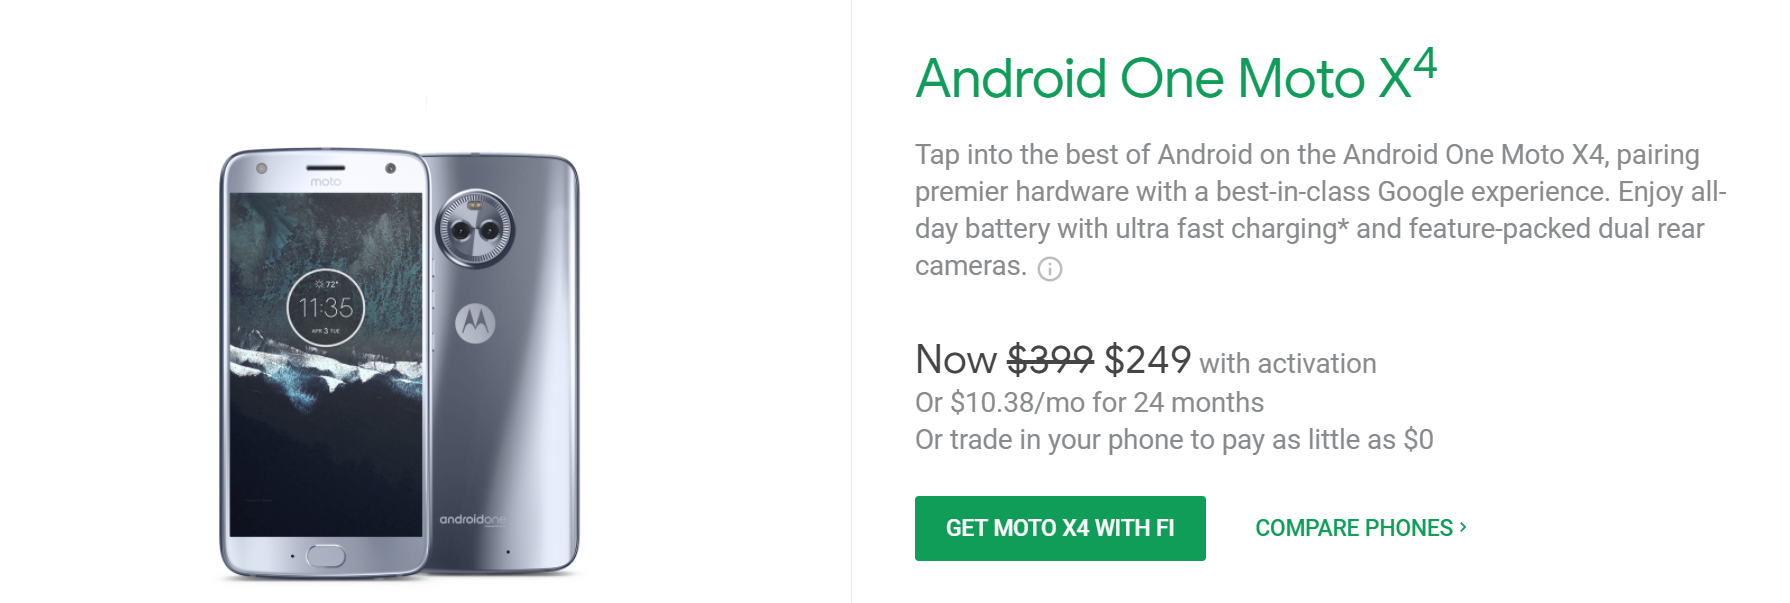 Moto X4 Android One price